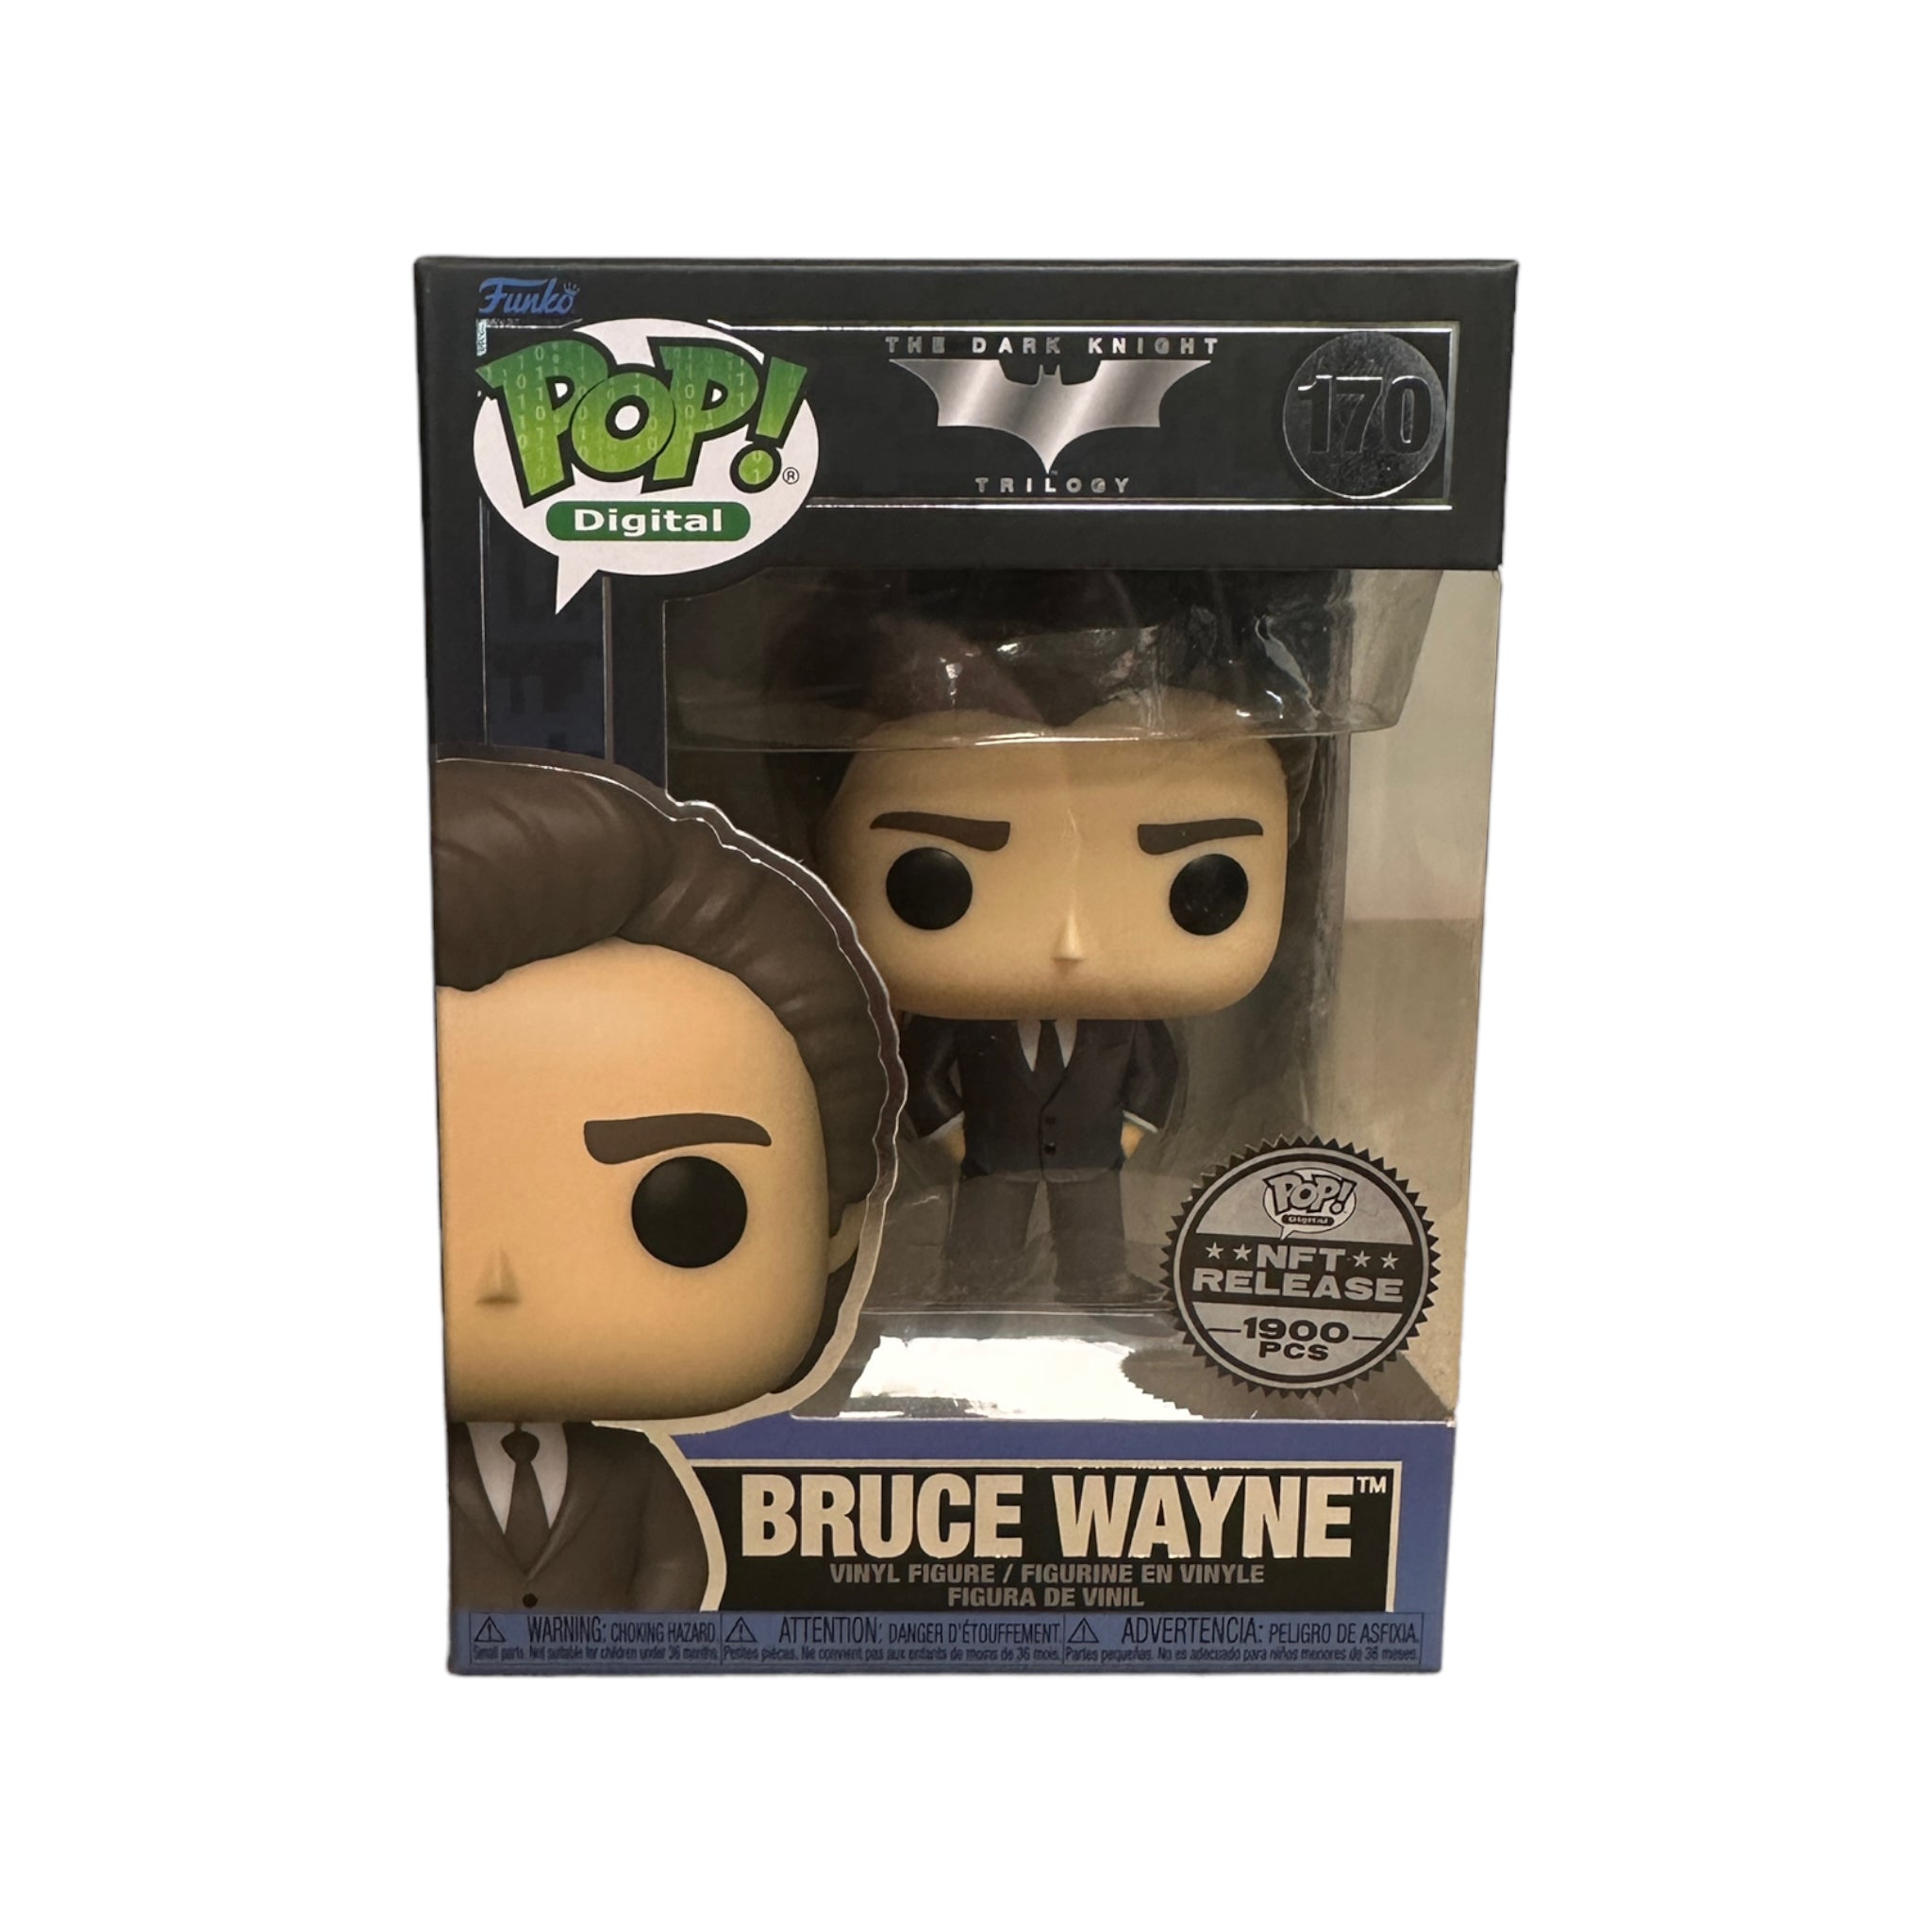 Bruce Wayne #170 Funko Pop! - The Dark Knight Trilogy - NFT Release Exclusive LE1900 Pcs - Condition 9/10